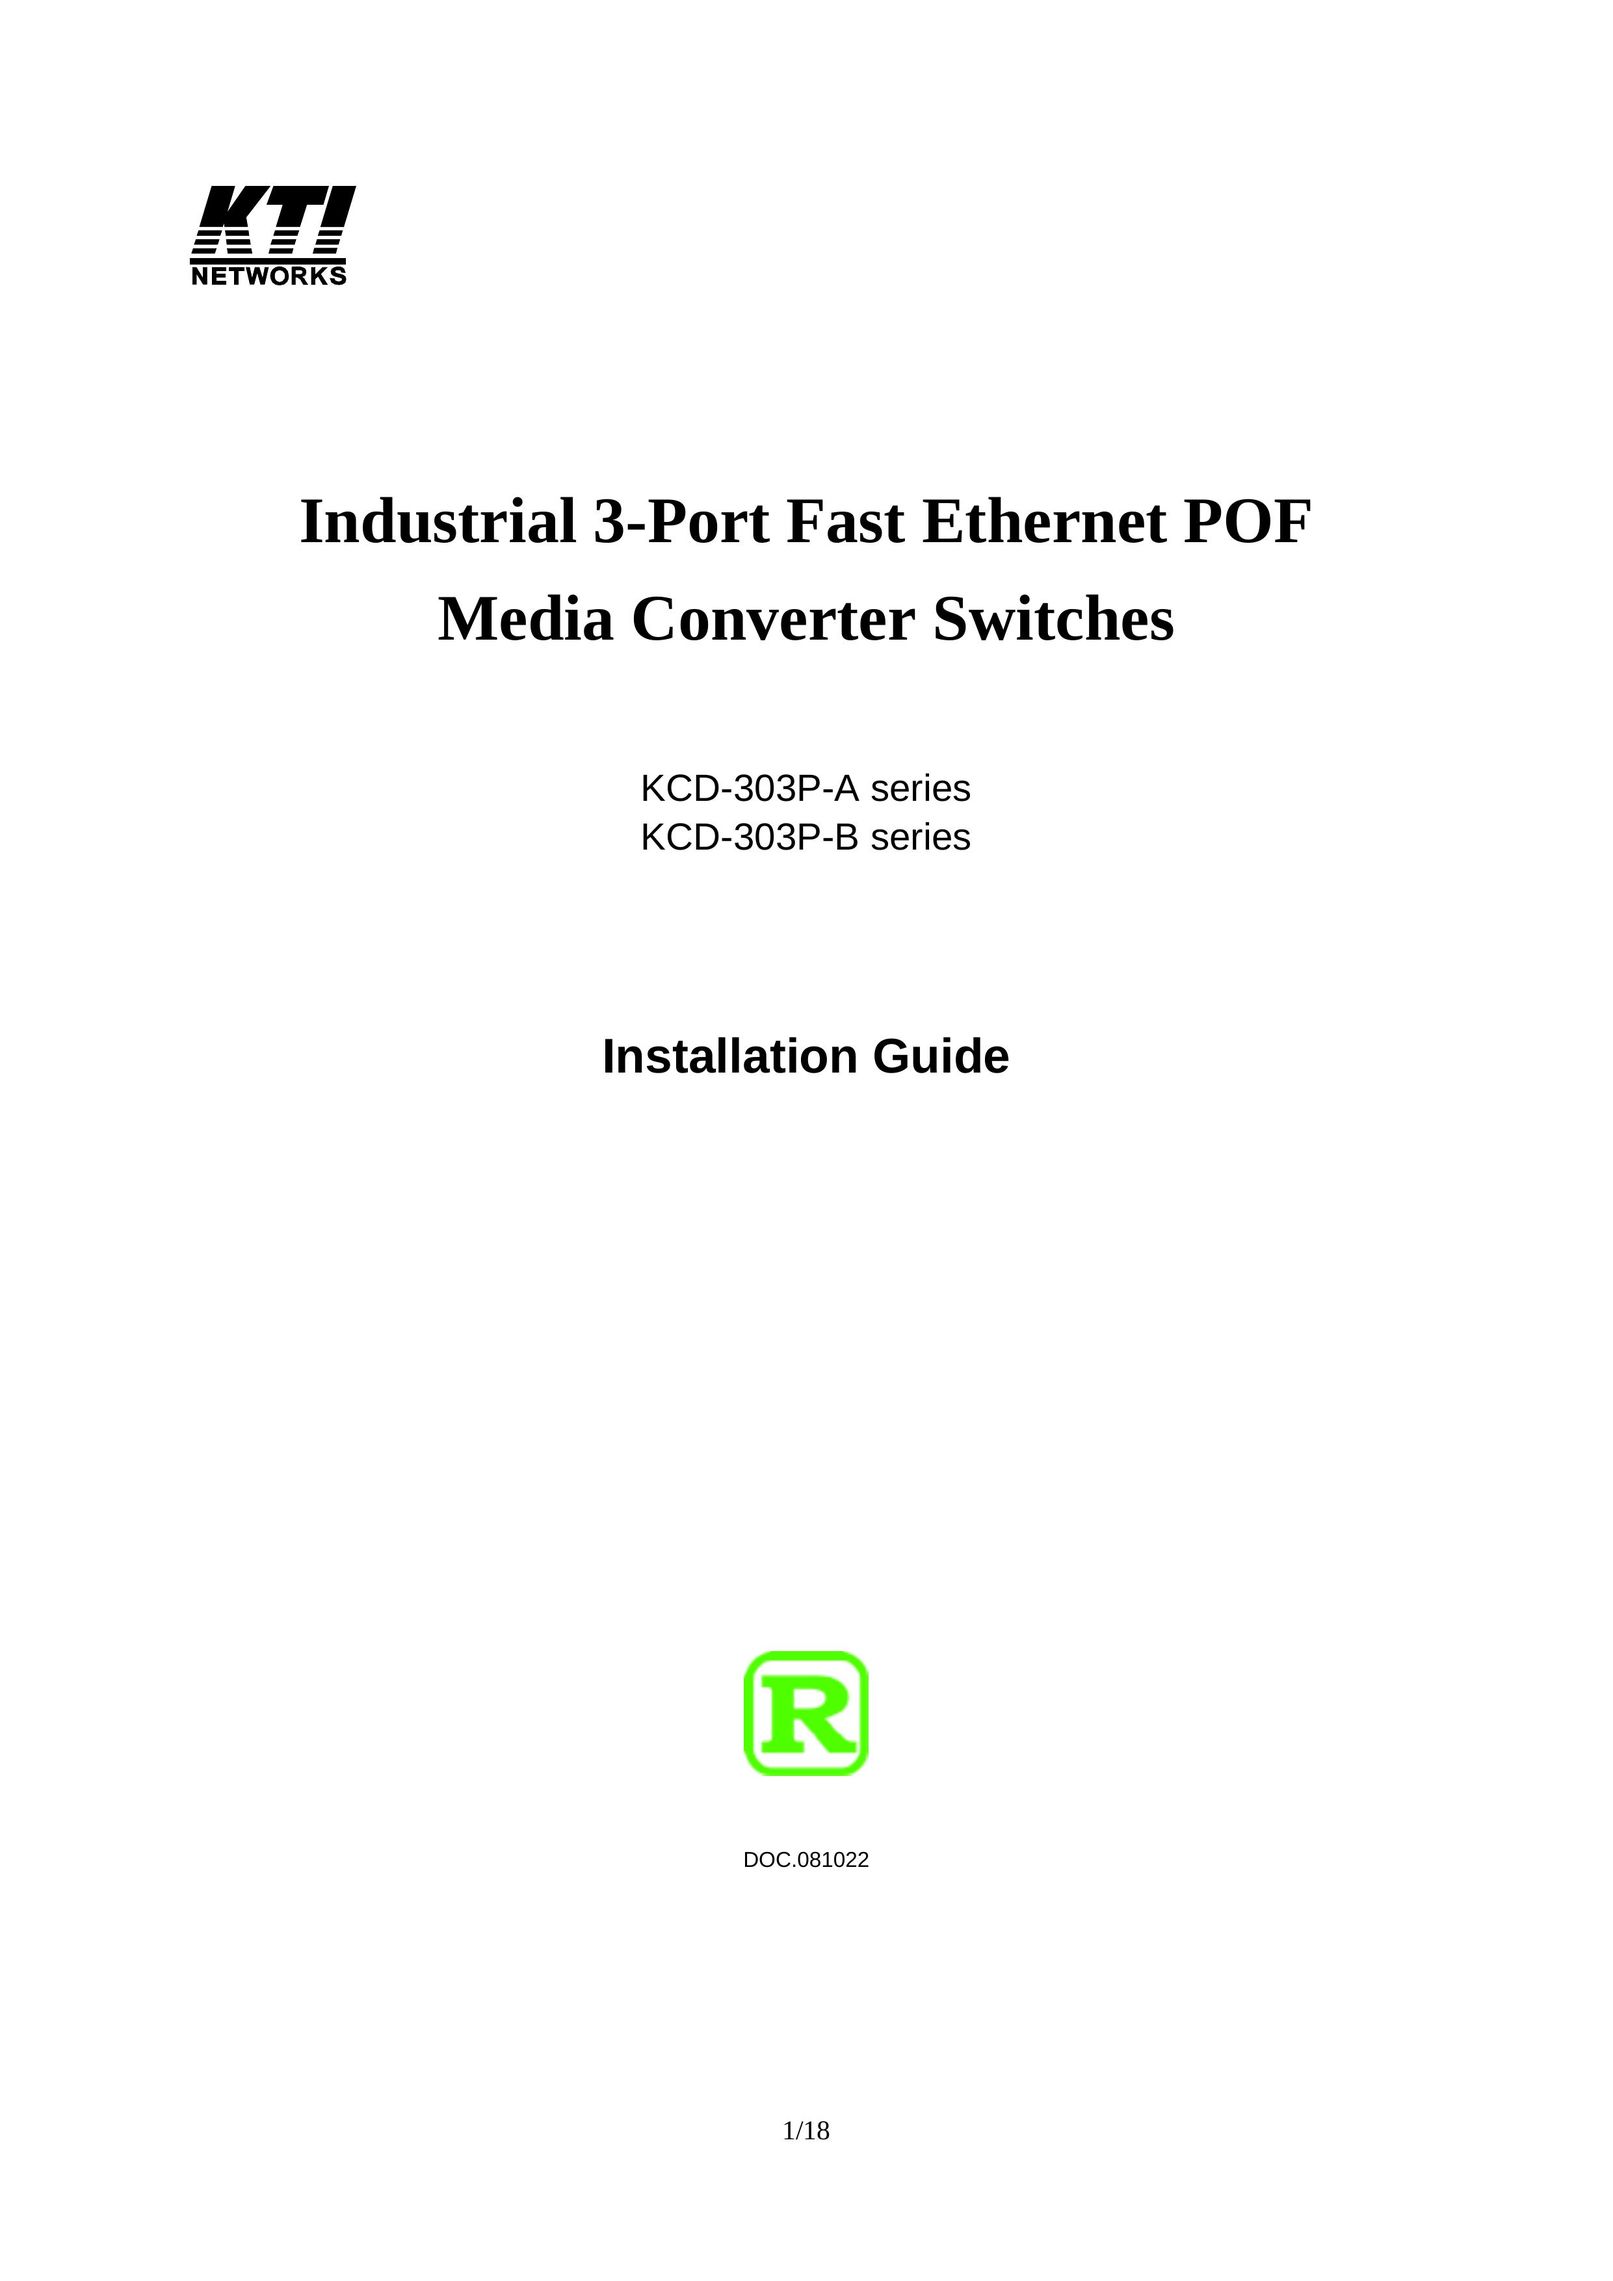 KTI Networks KCD-303P-B1 Switch User Manual